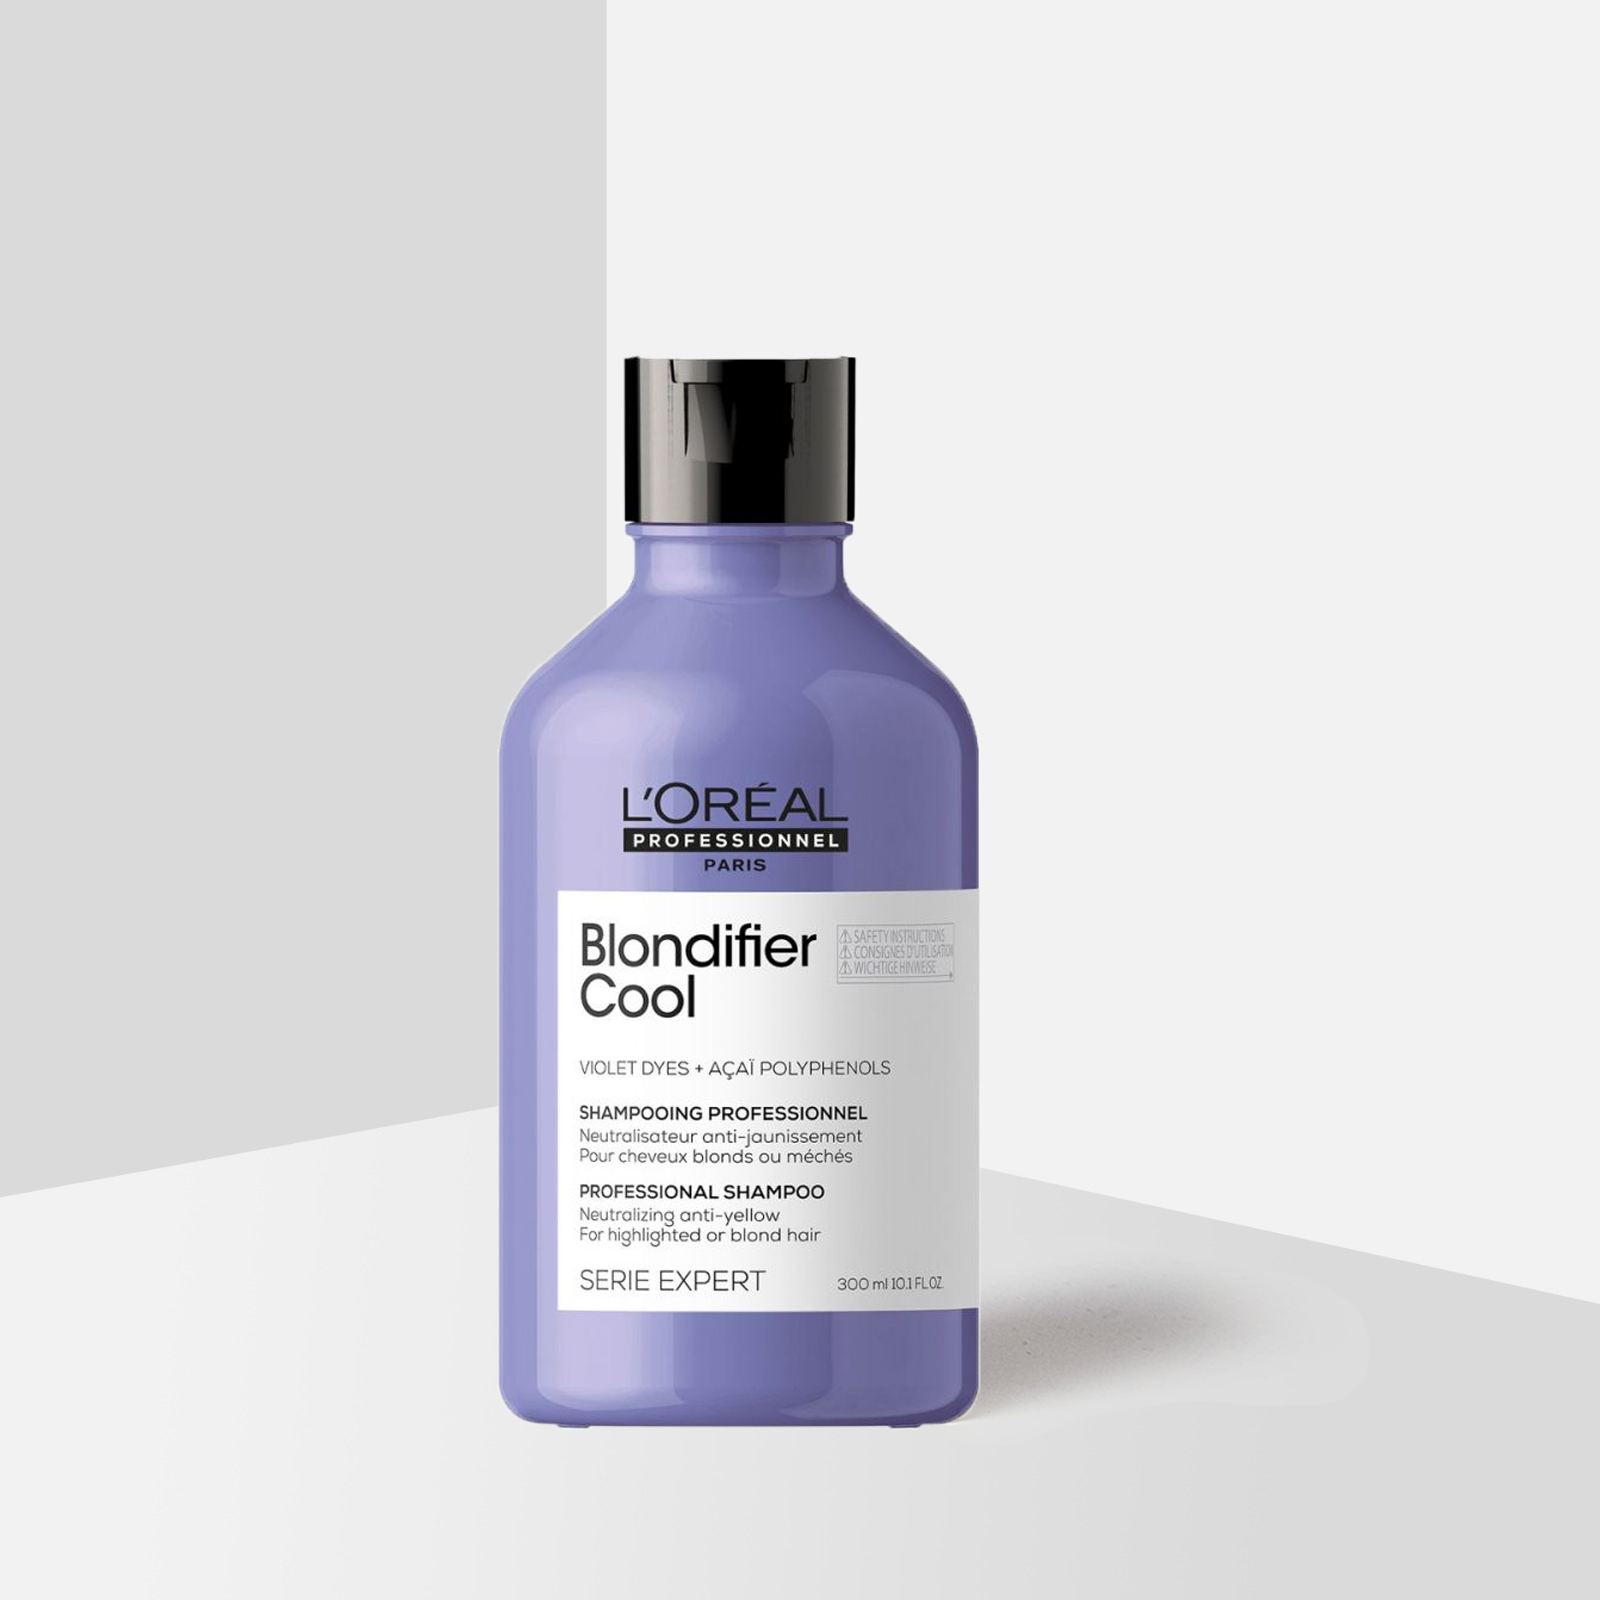 L'Oreal Blondifier Cool Shampoo 300ml